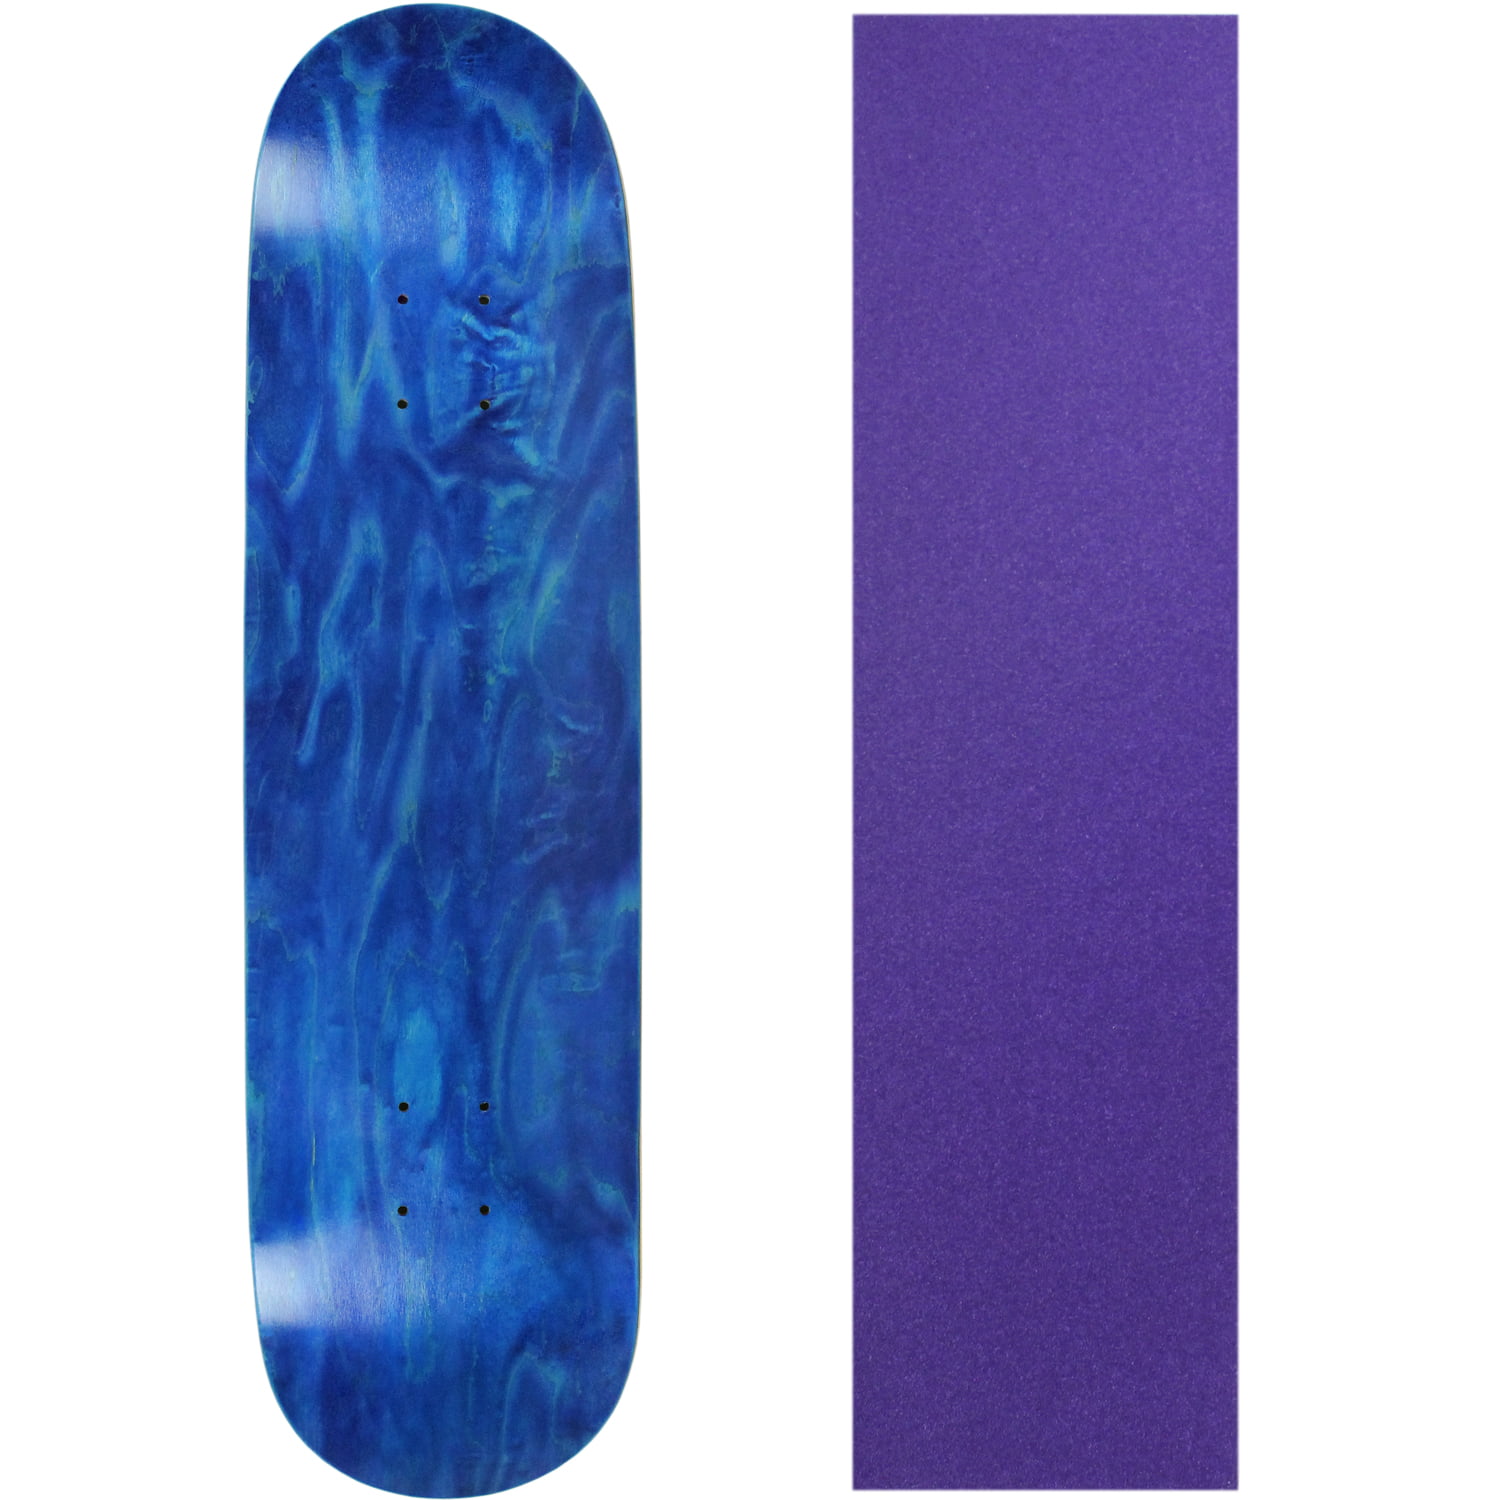 LAMSTER PRO Blank Skateboard Deck BLUE Stained SIZE 8.0 optional griptape 